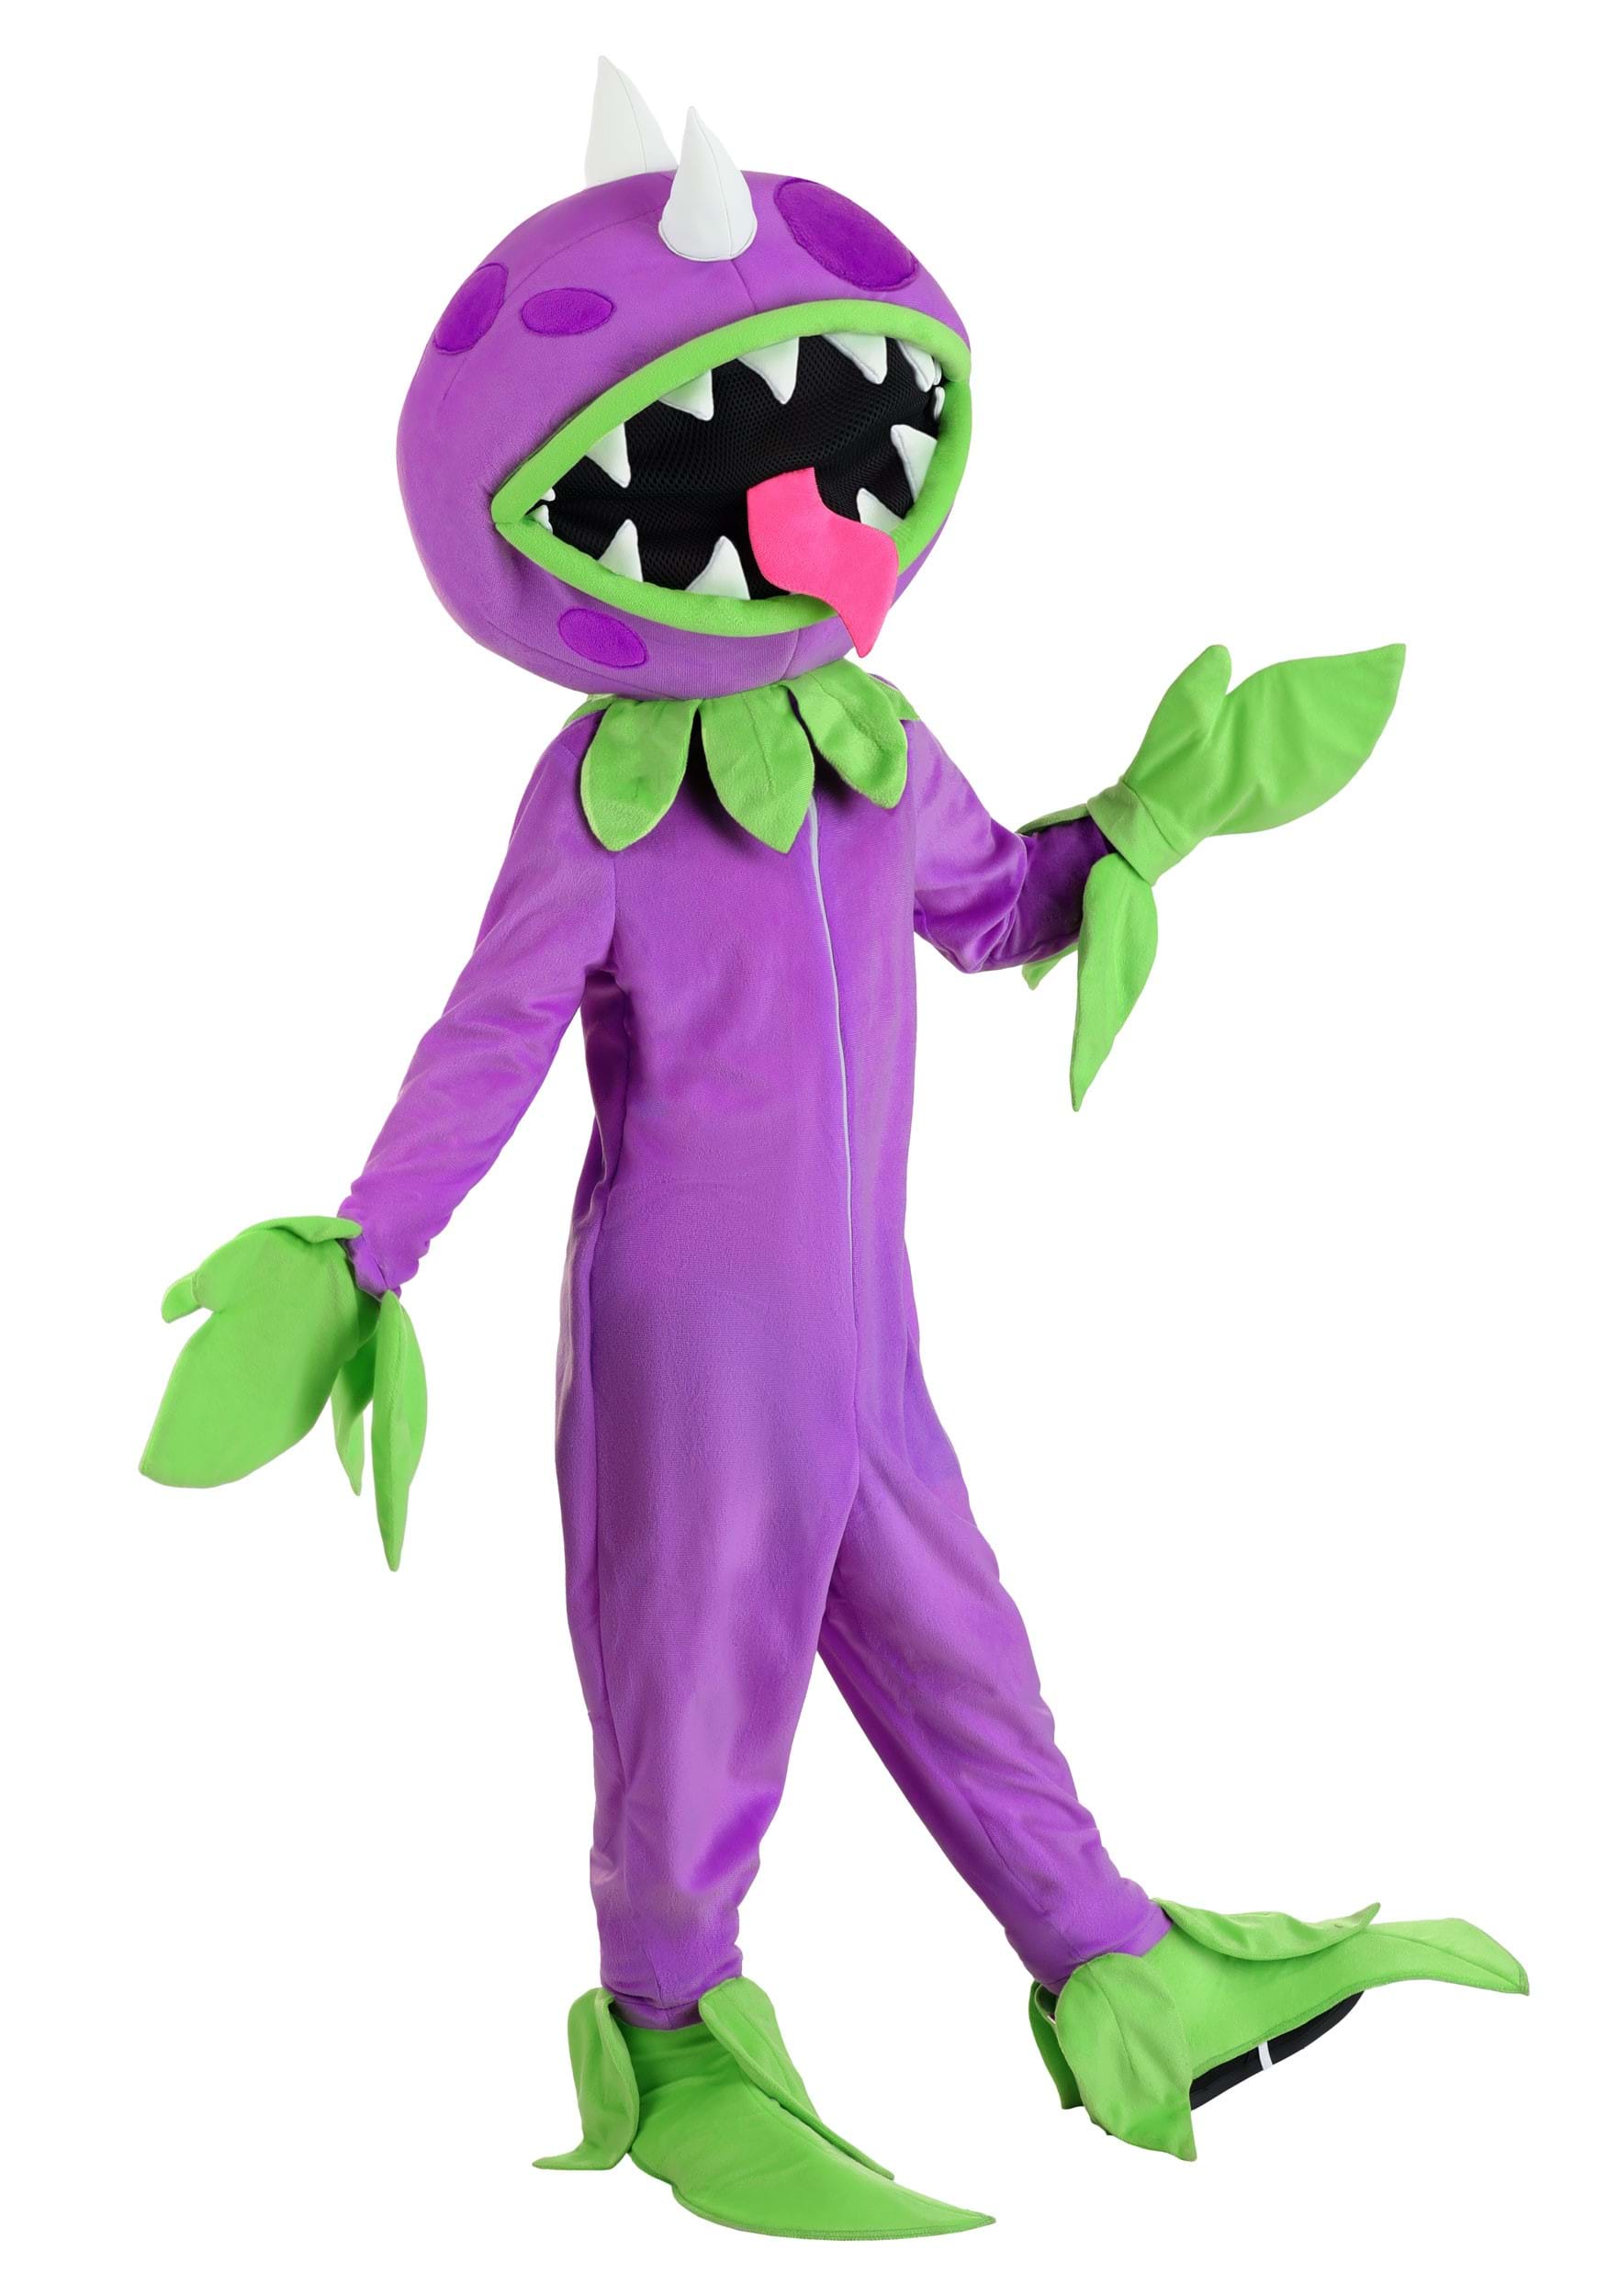 Photos - Fancy Dress VS FUN Costumes Kid's Plants  Zombies Chomper Costume Green/Purple FUN2 